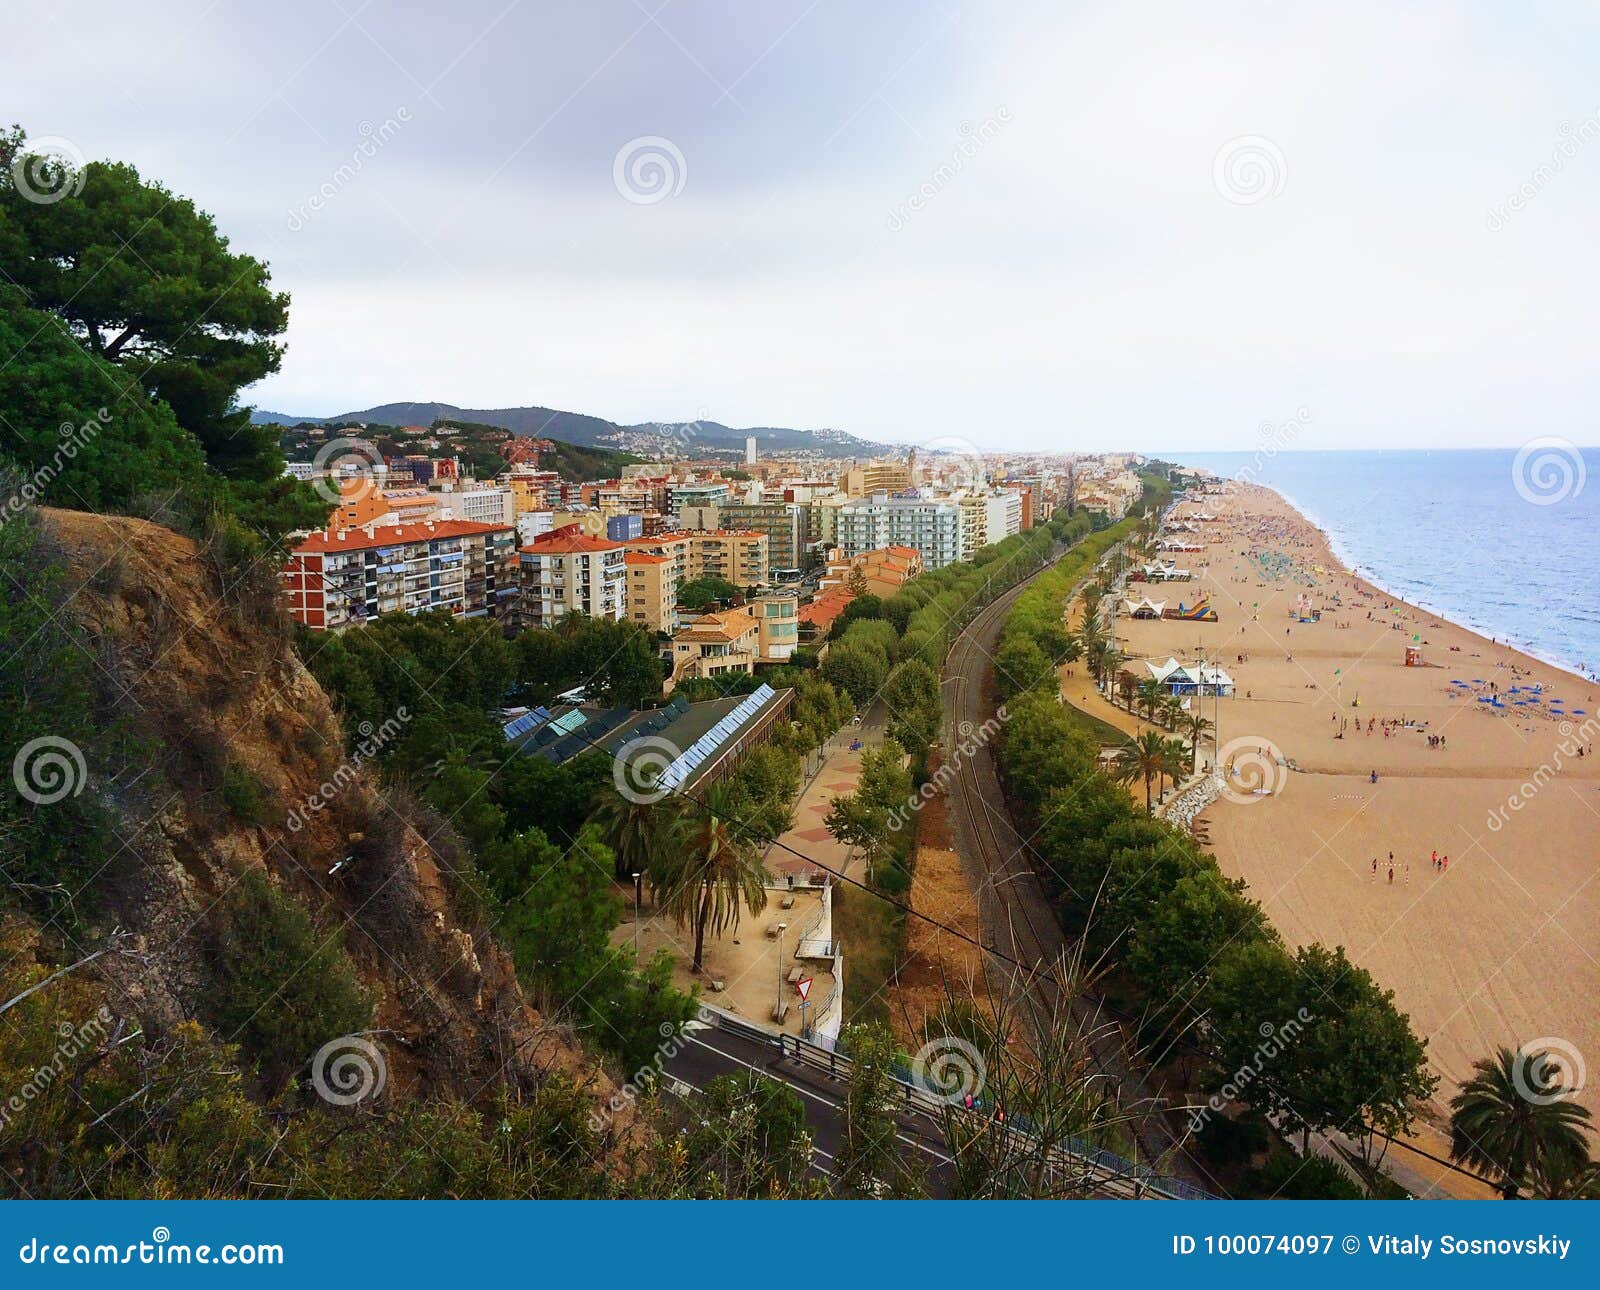 Popular Beaches of Catalonia. Spain Stock Image - Image of landmark ...